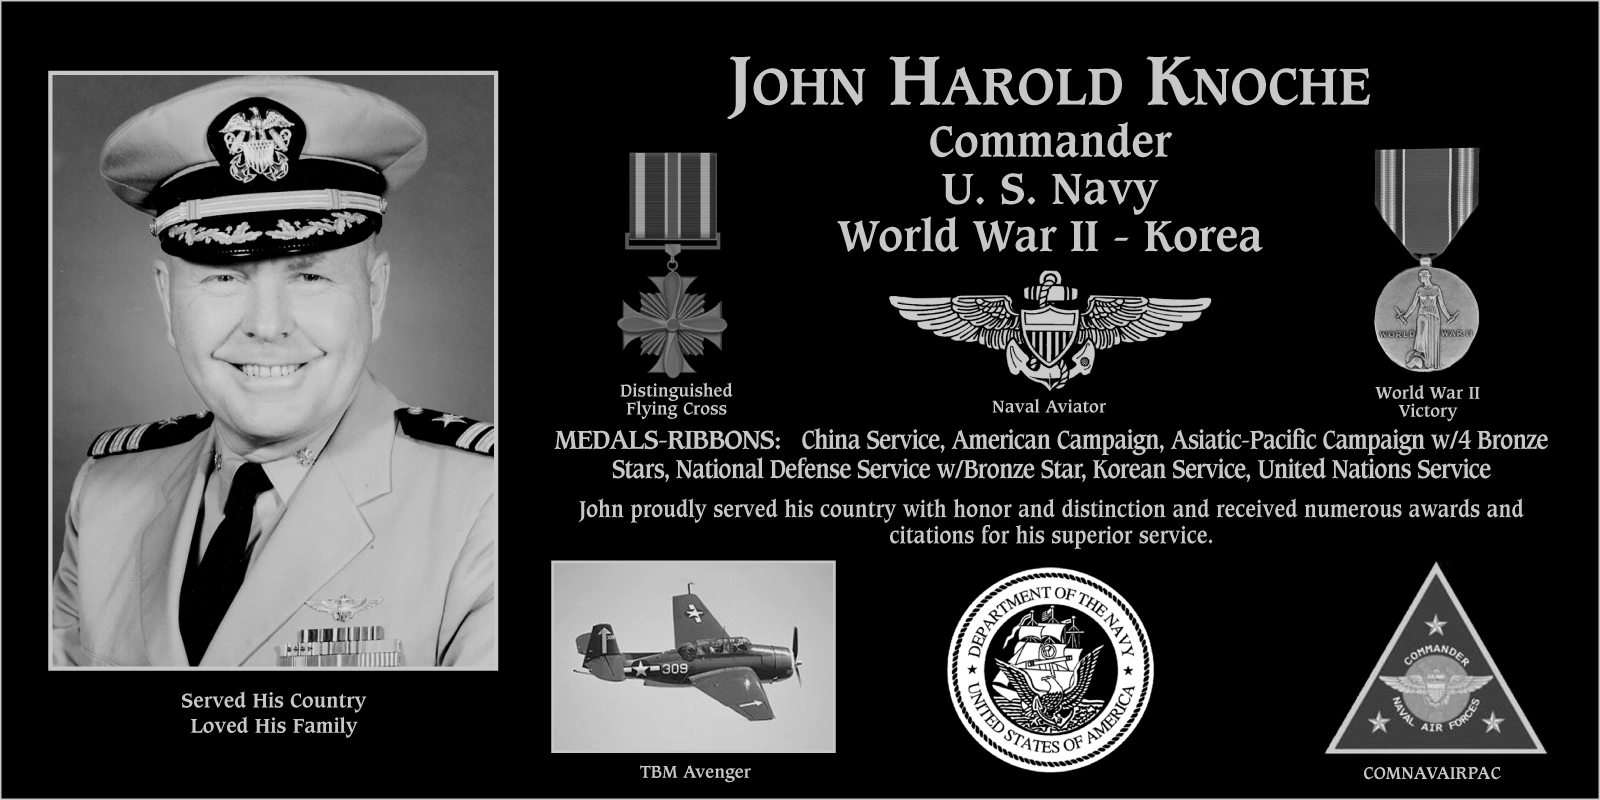 John Harold Knoche